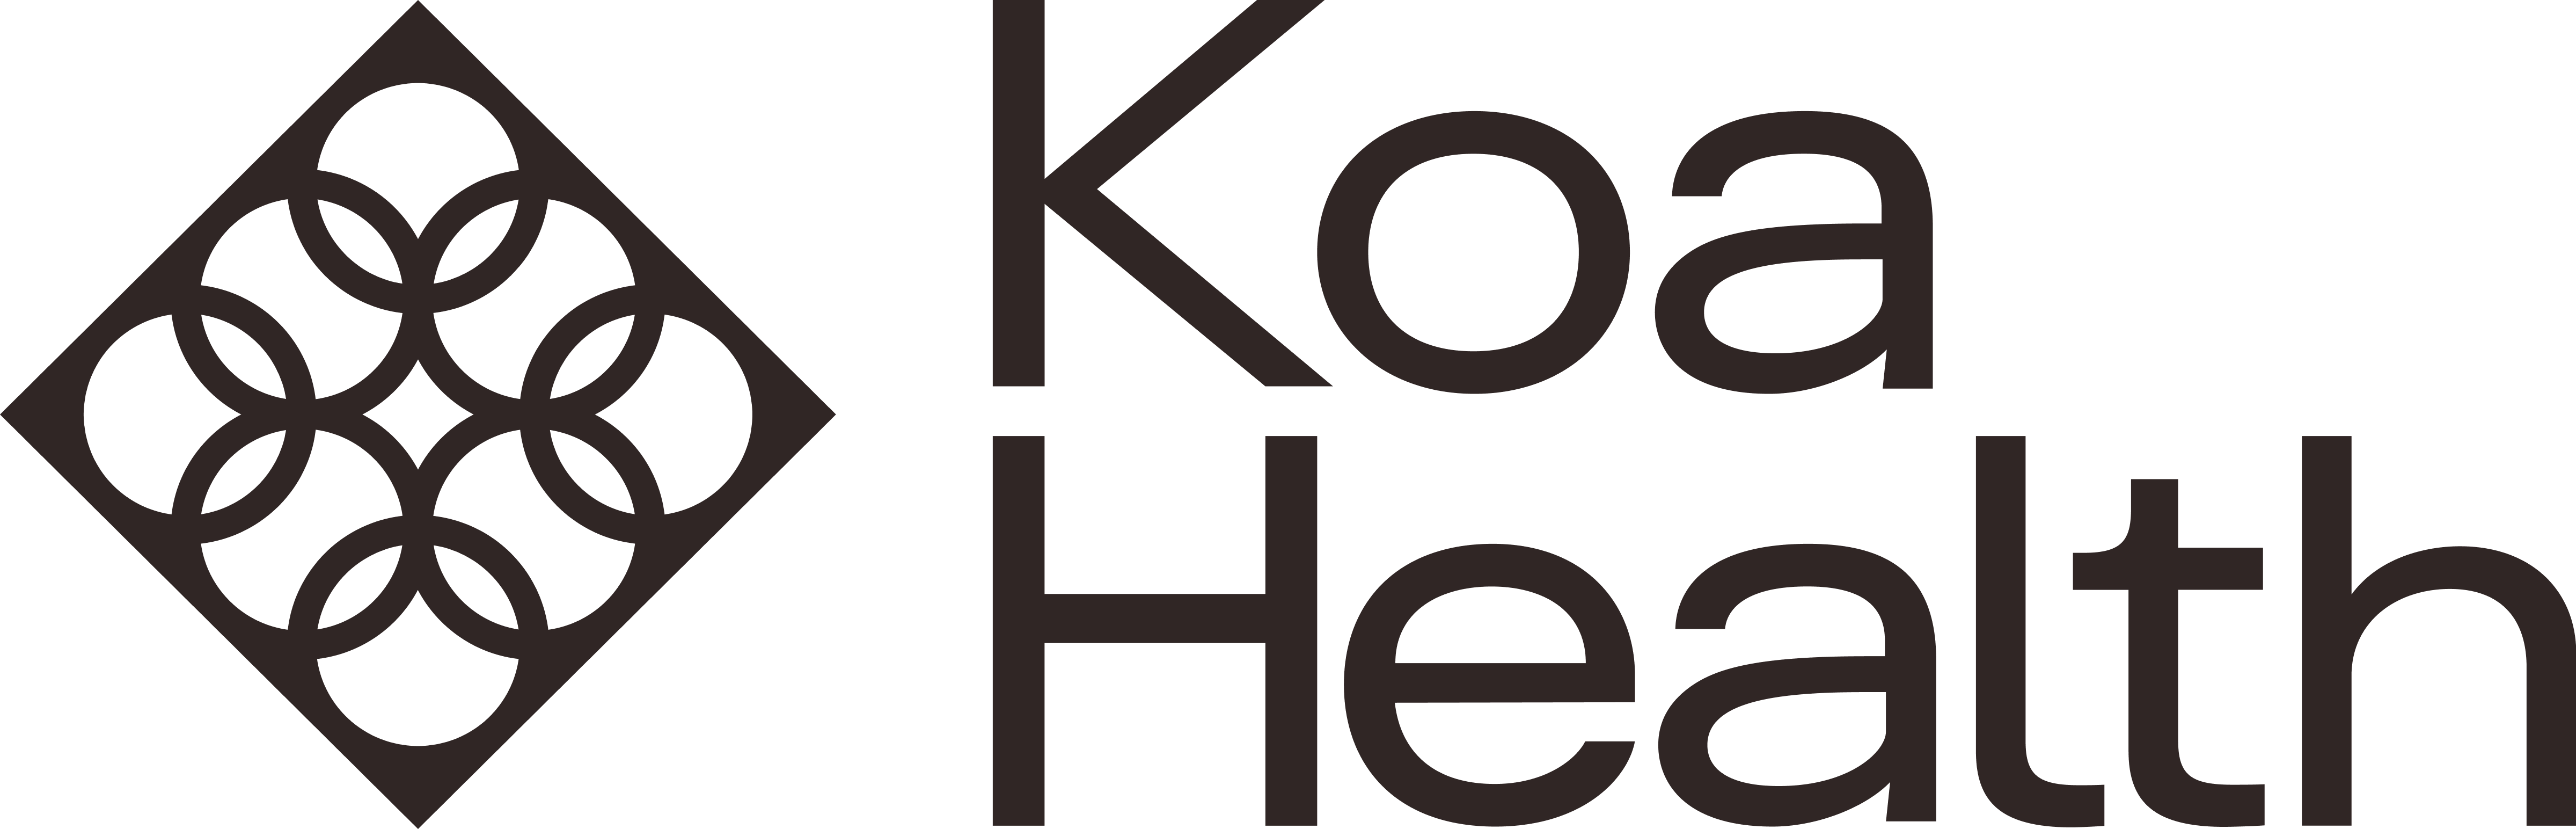 Design jobs at Koa Health